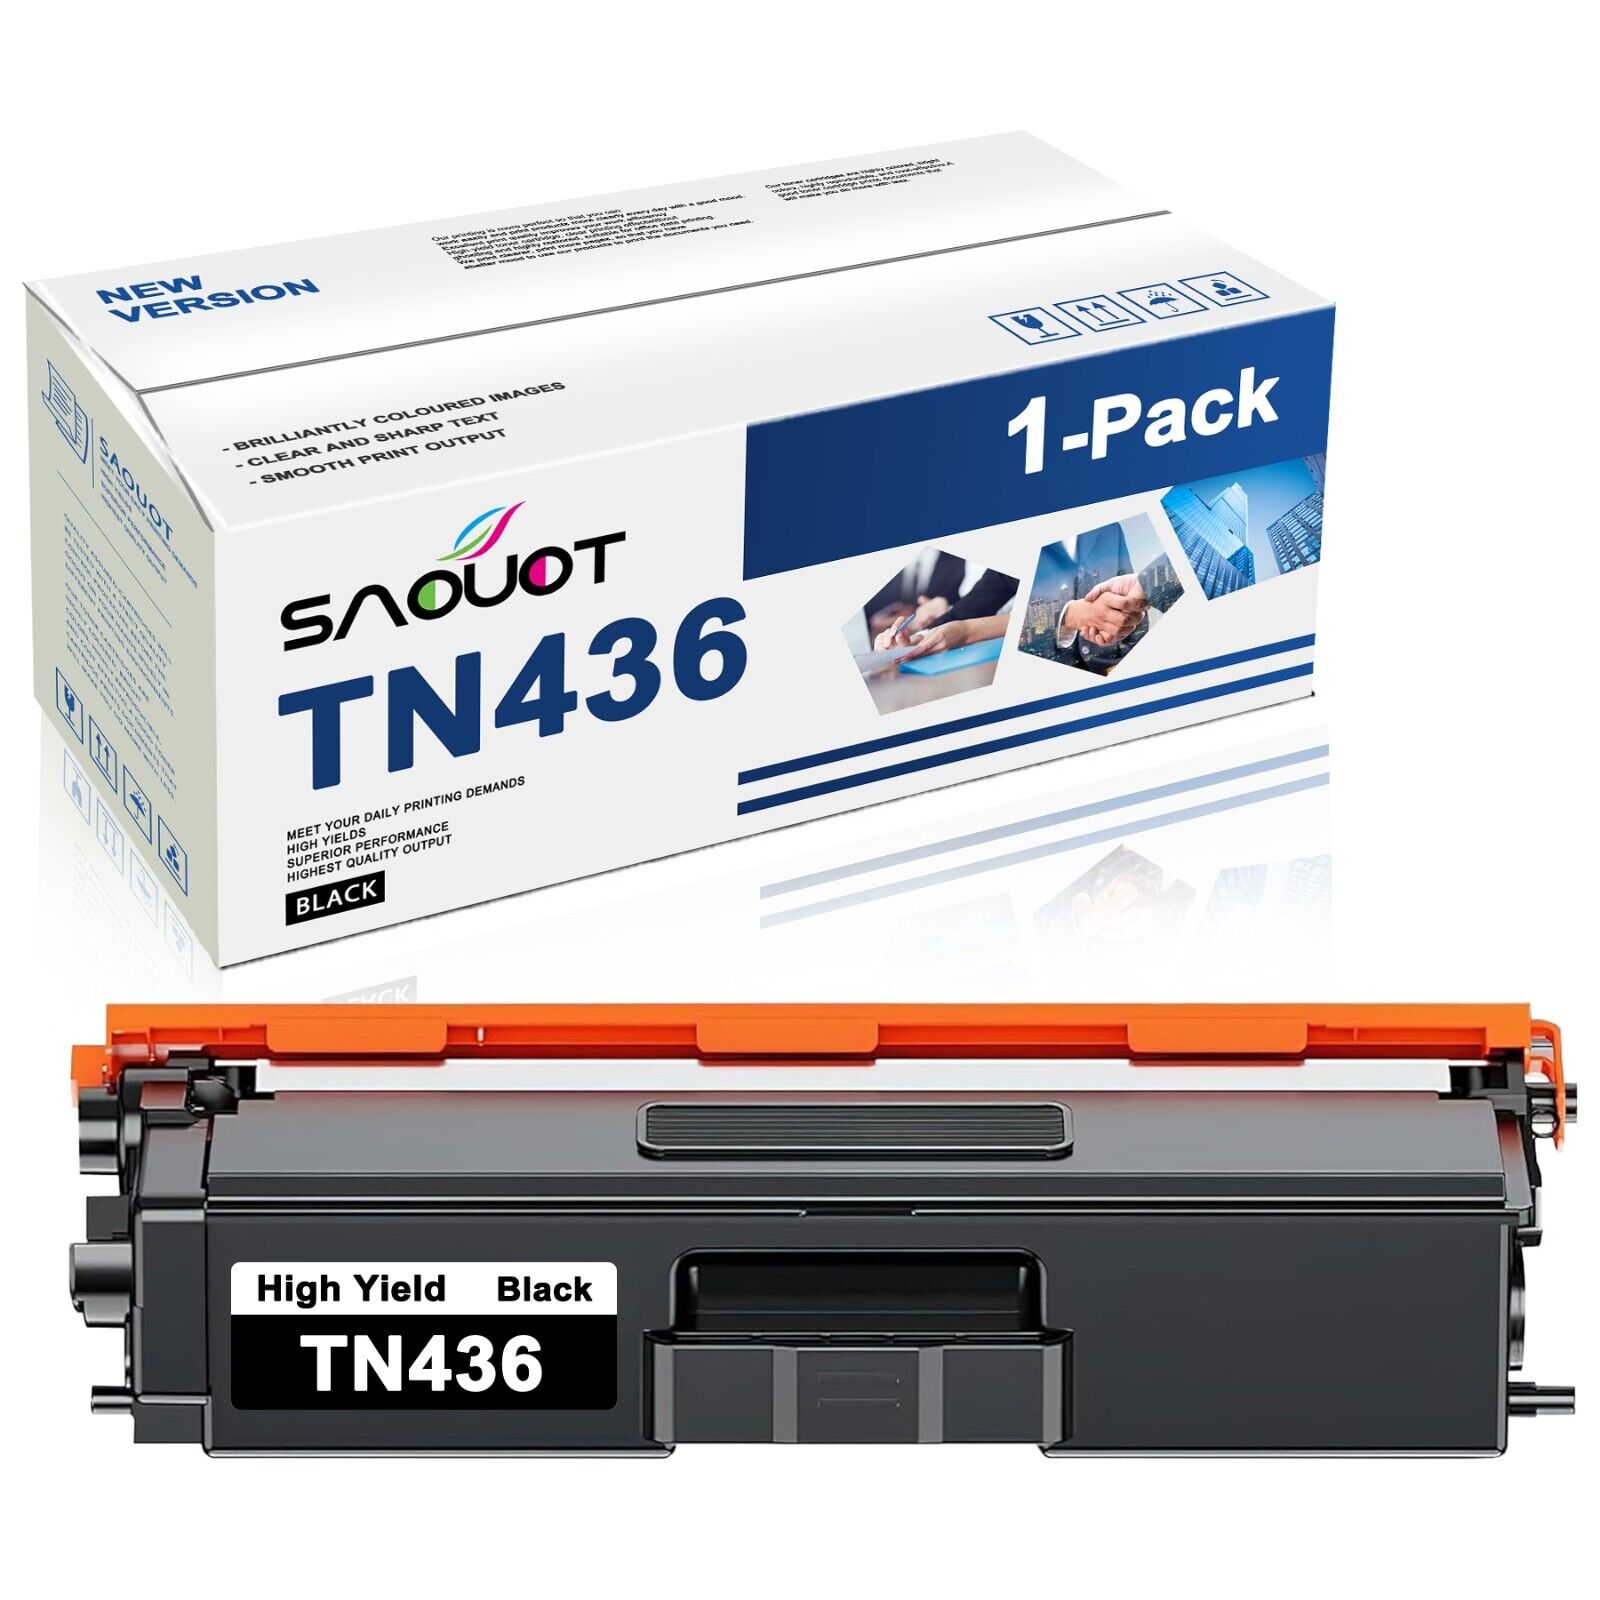 TN436 TN-436 Toner Cartridge Black Replacement for Brother tn 436 MFC-L8905CDW